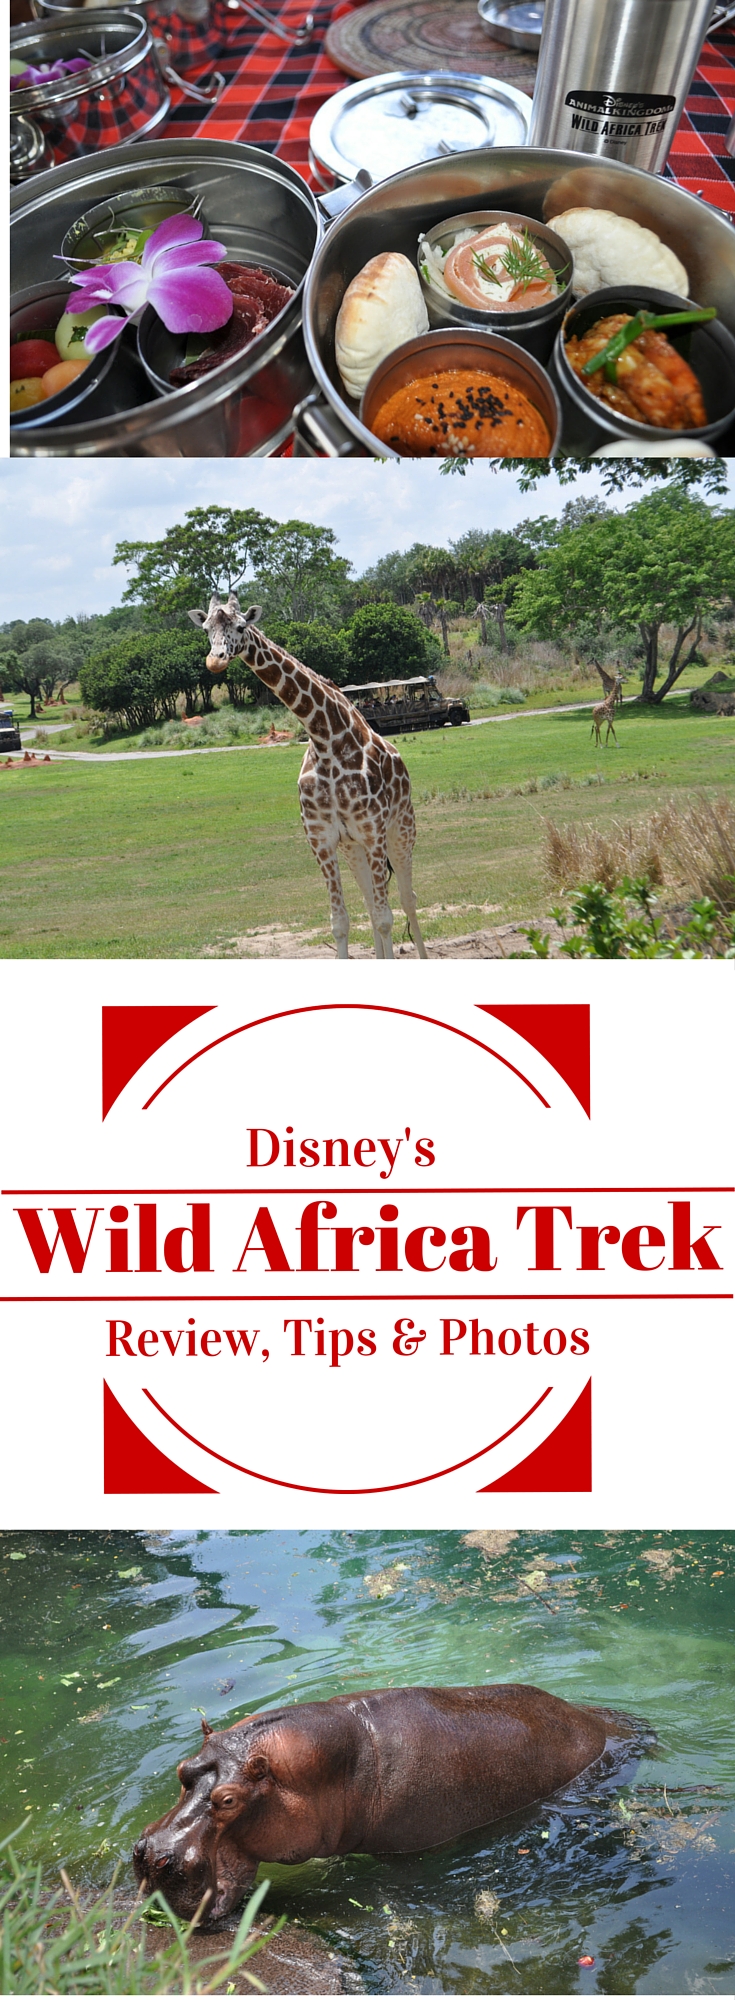 Disney's Wild Africa Trek Review Tips and Photos